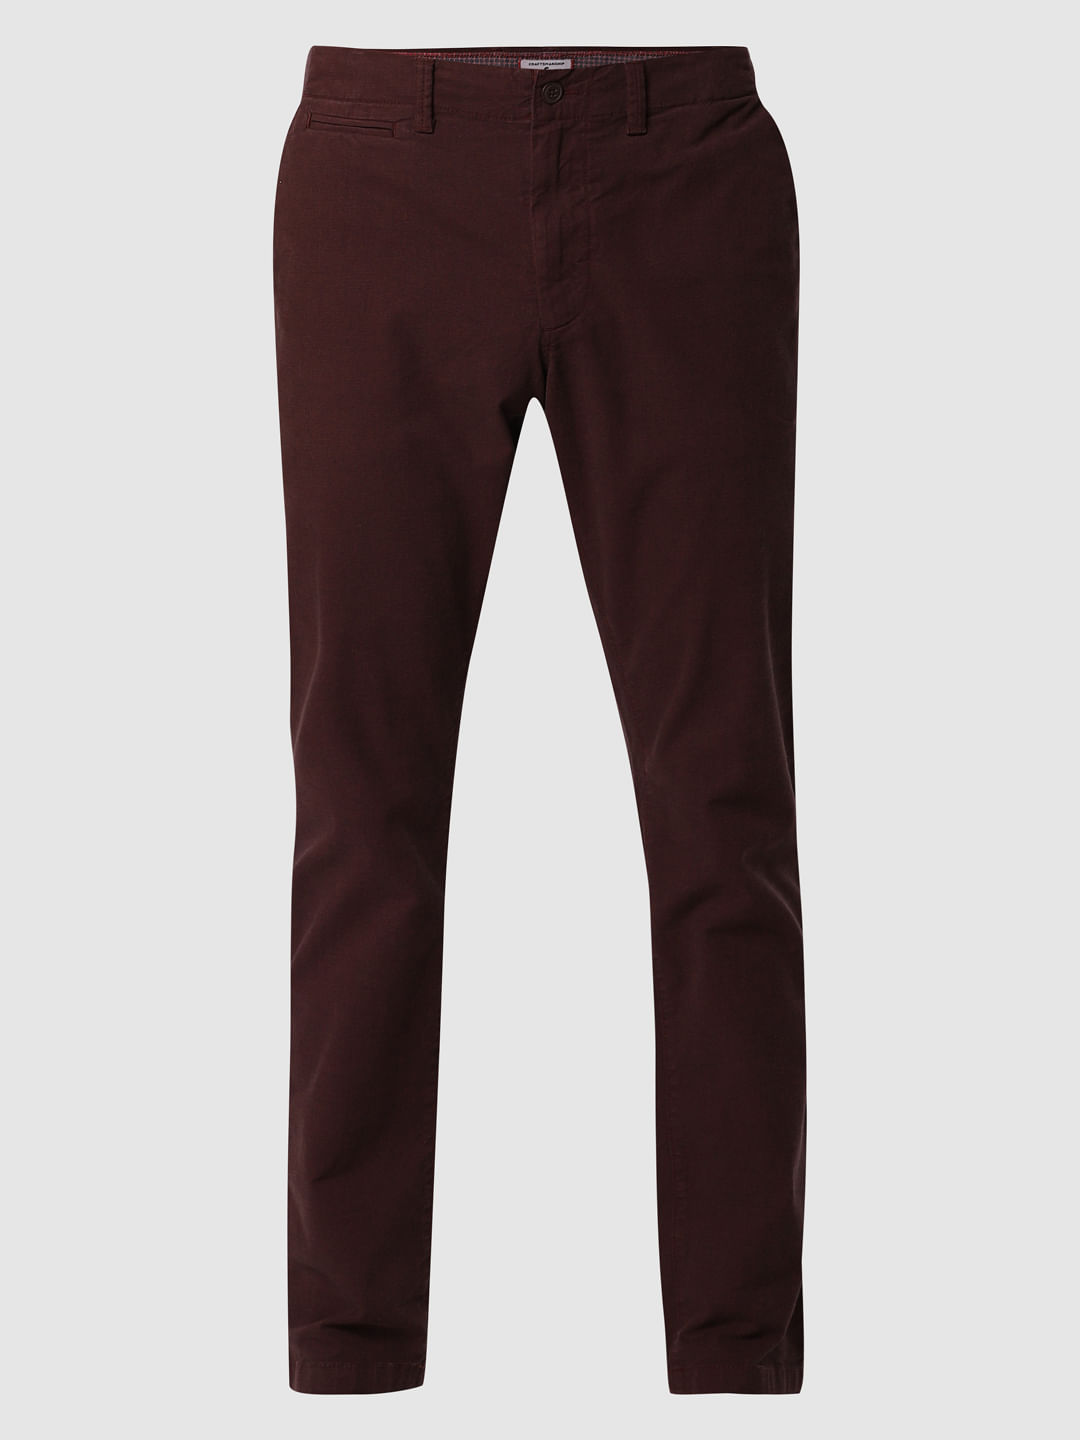 Buy Ferrecci Mens Halo Slim Fit FlatFront Dress Pants Burgundy 32x32  at Amazonin